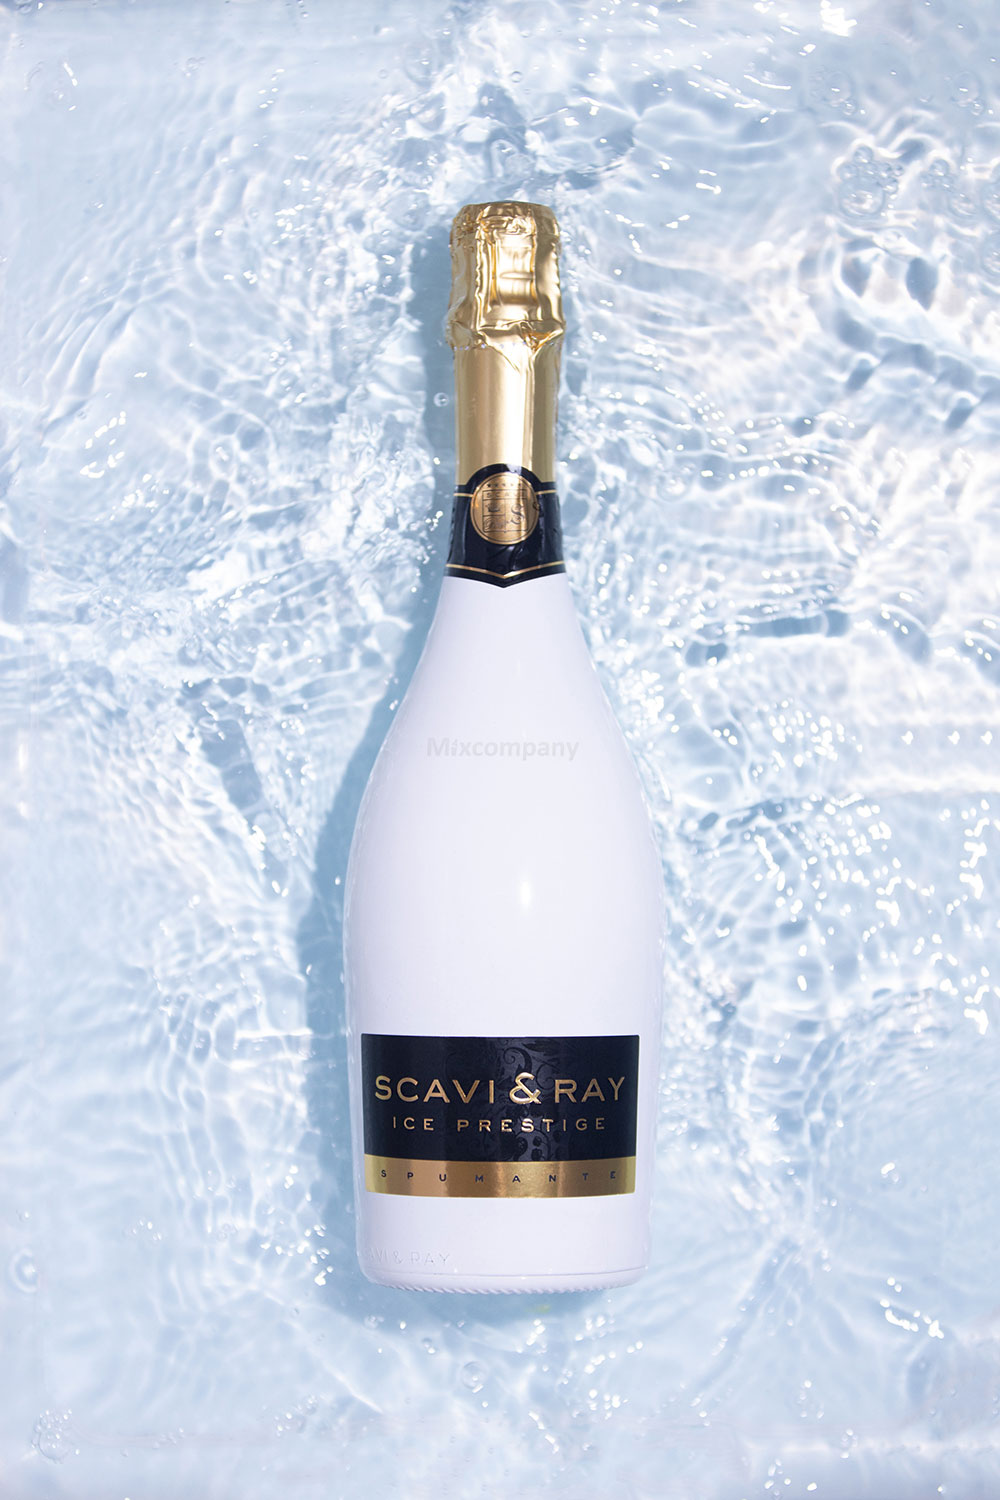 Scavi & Ray Schuber Geschenkset - Scavi & Ray ICE Prestige 0,75l (12% Vol) + 2x ICE Gläser